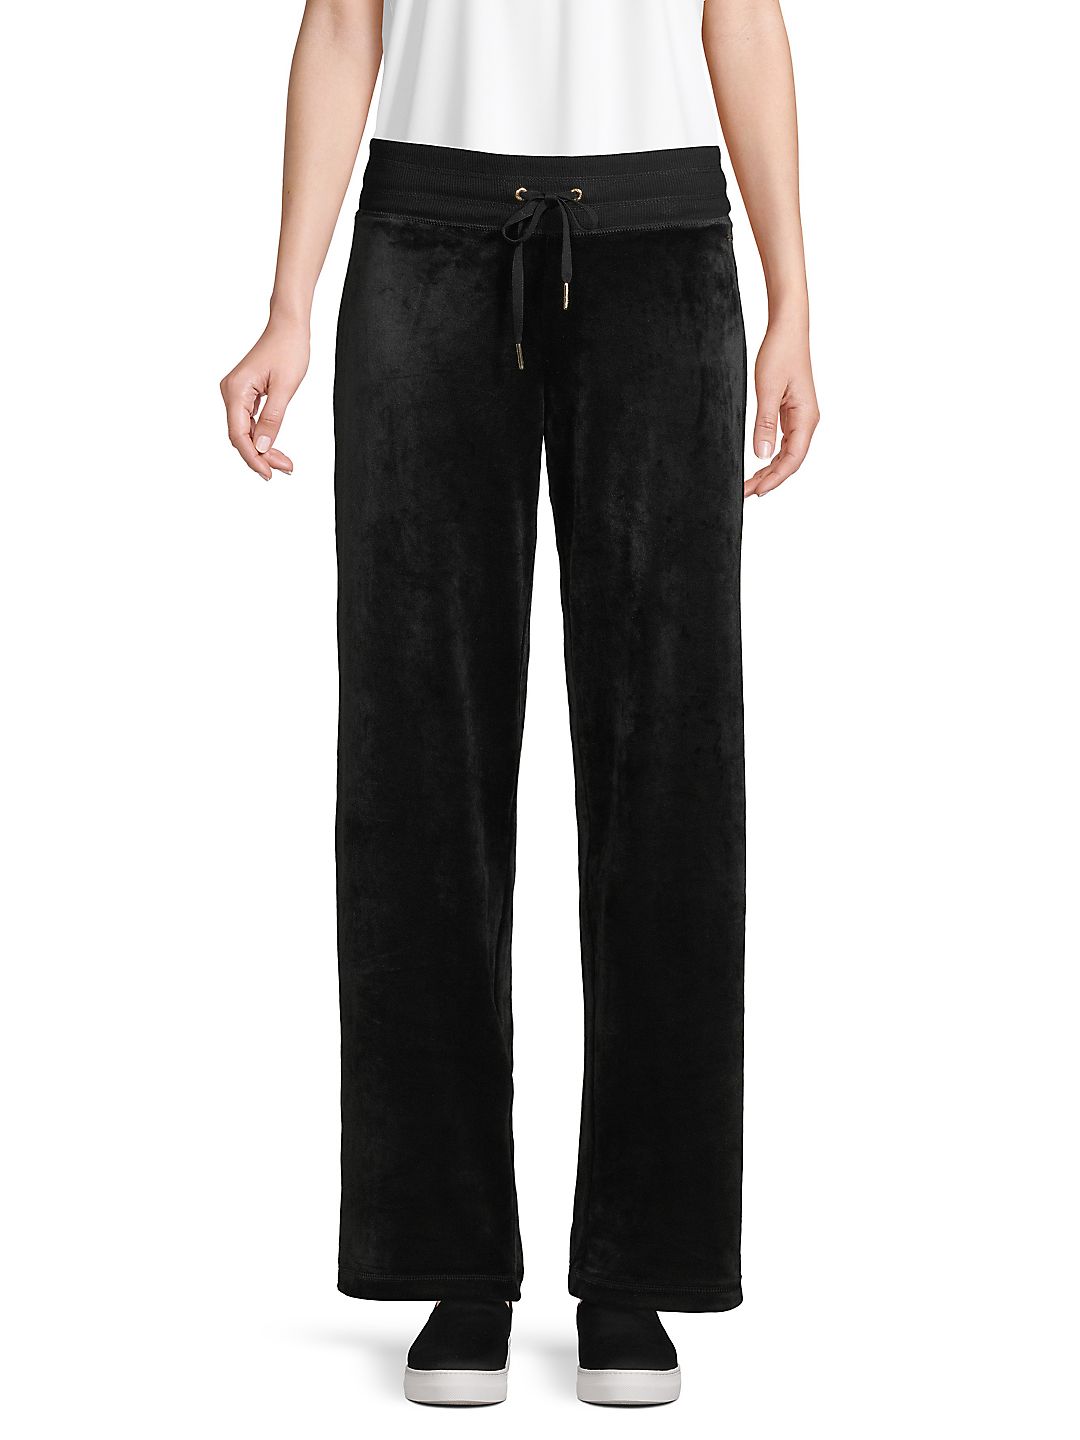 Calvin Klein Women's Velvet Drawstring Sweatpants Black Size 2XL